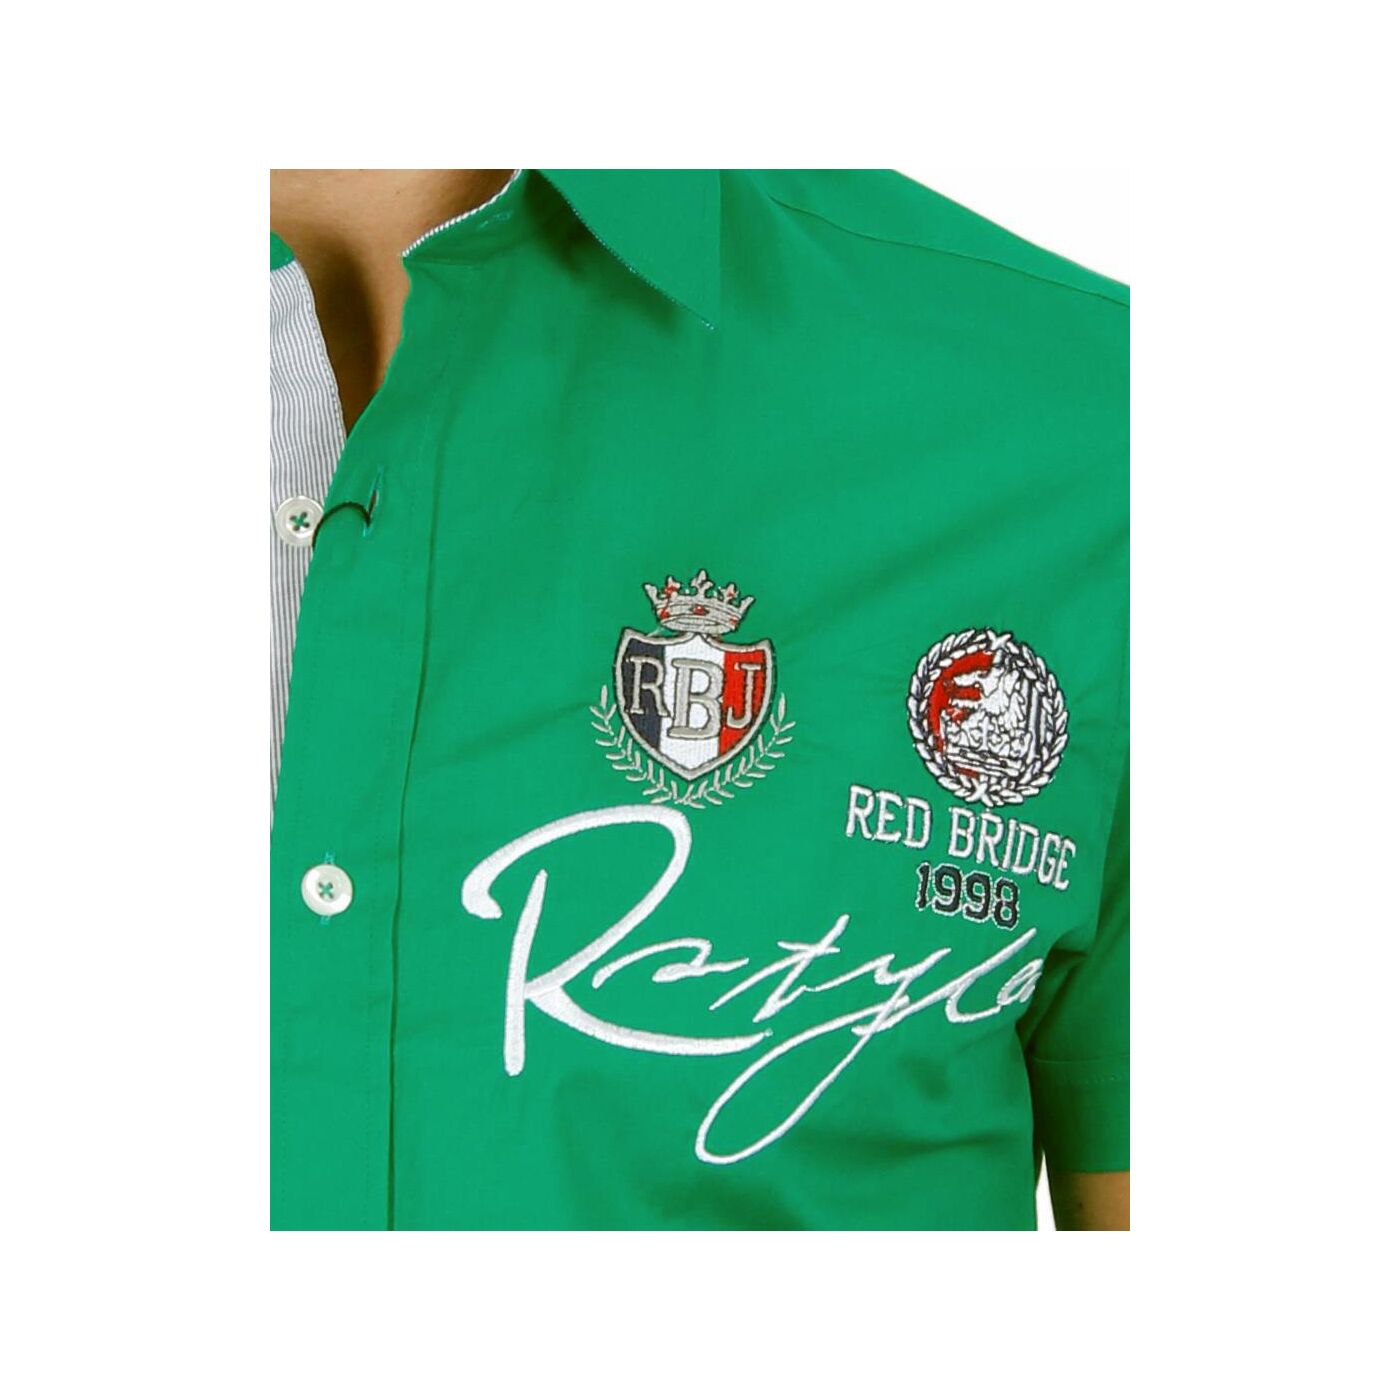 Red Bridge Herren R-Style kurzarm Design , € Slim 22,90 R-2122 - grün Fit Hemd